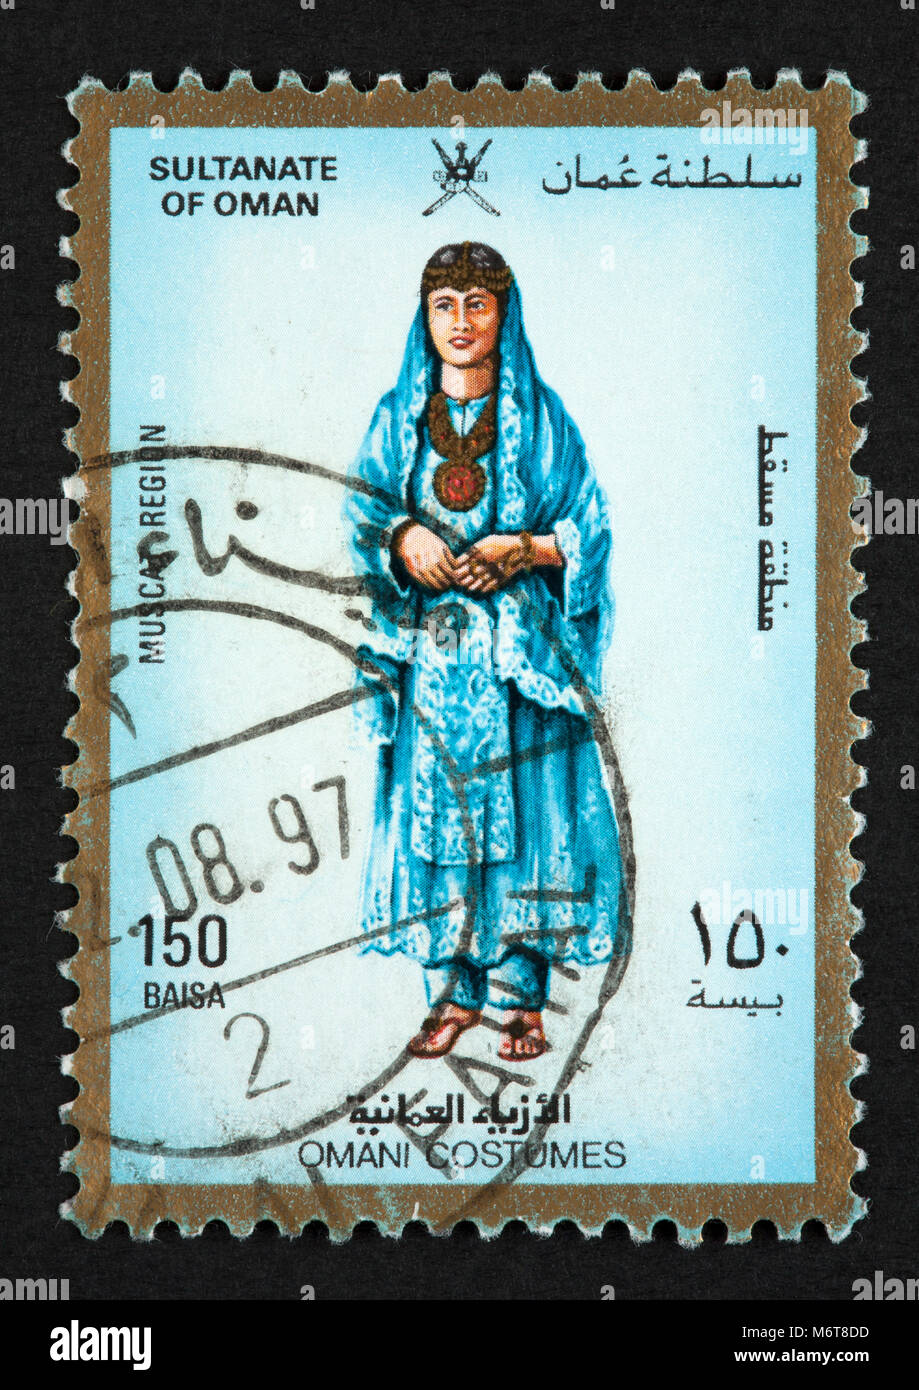 Sultanate of Oman postage stamp Stock Photo - Alamy